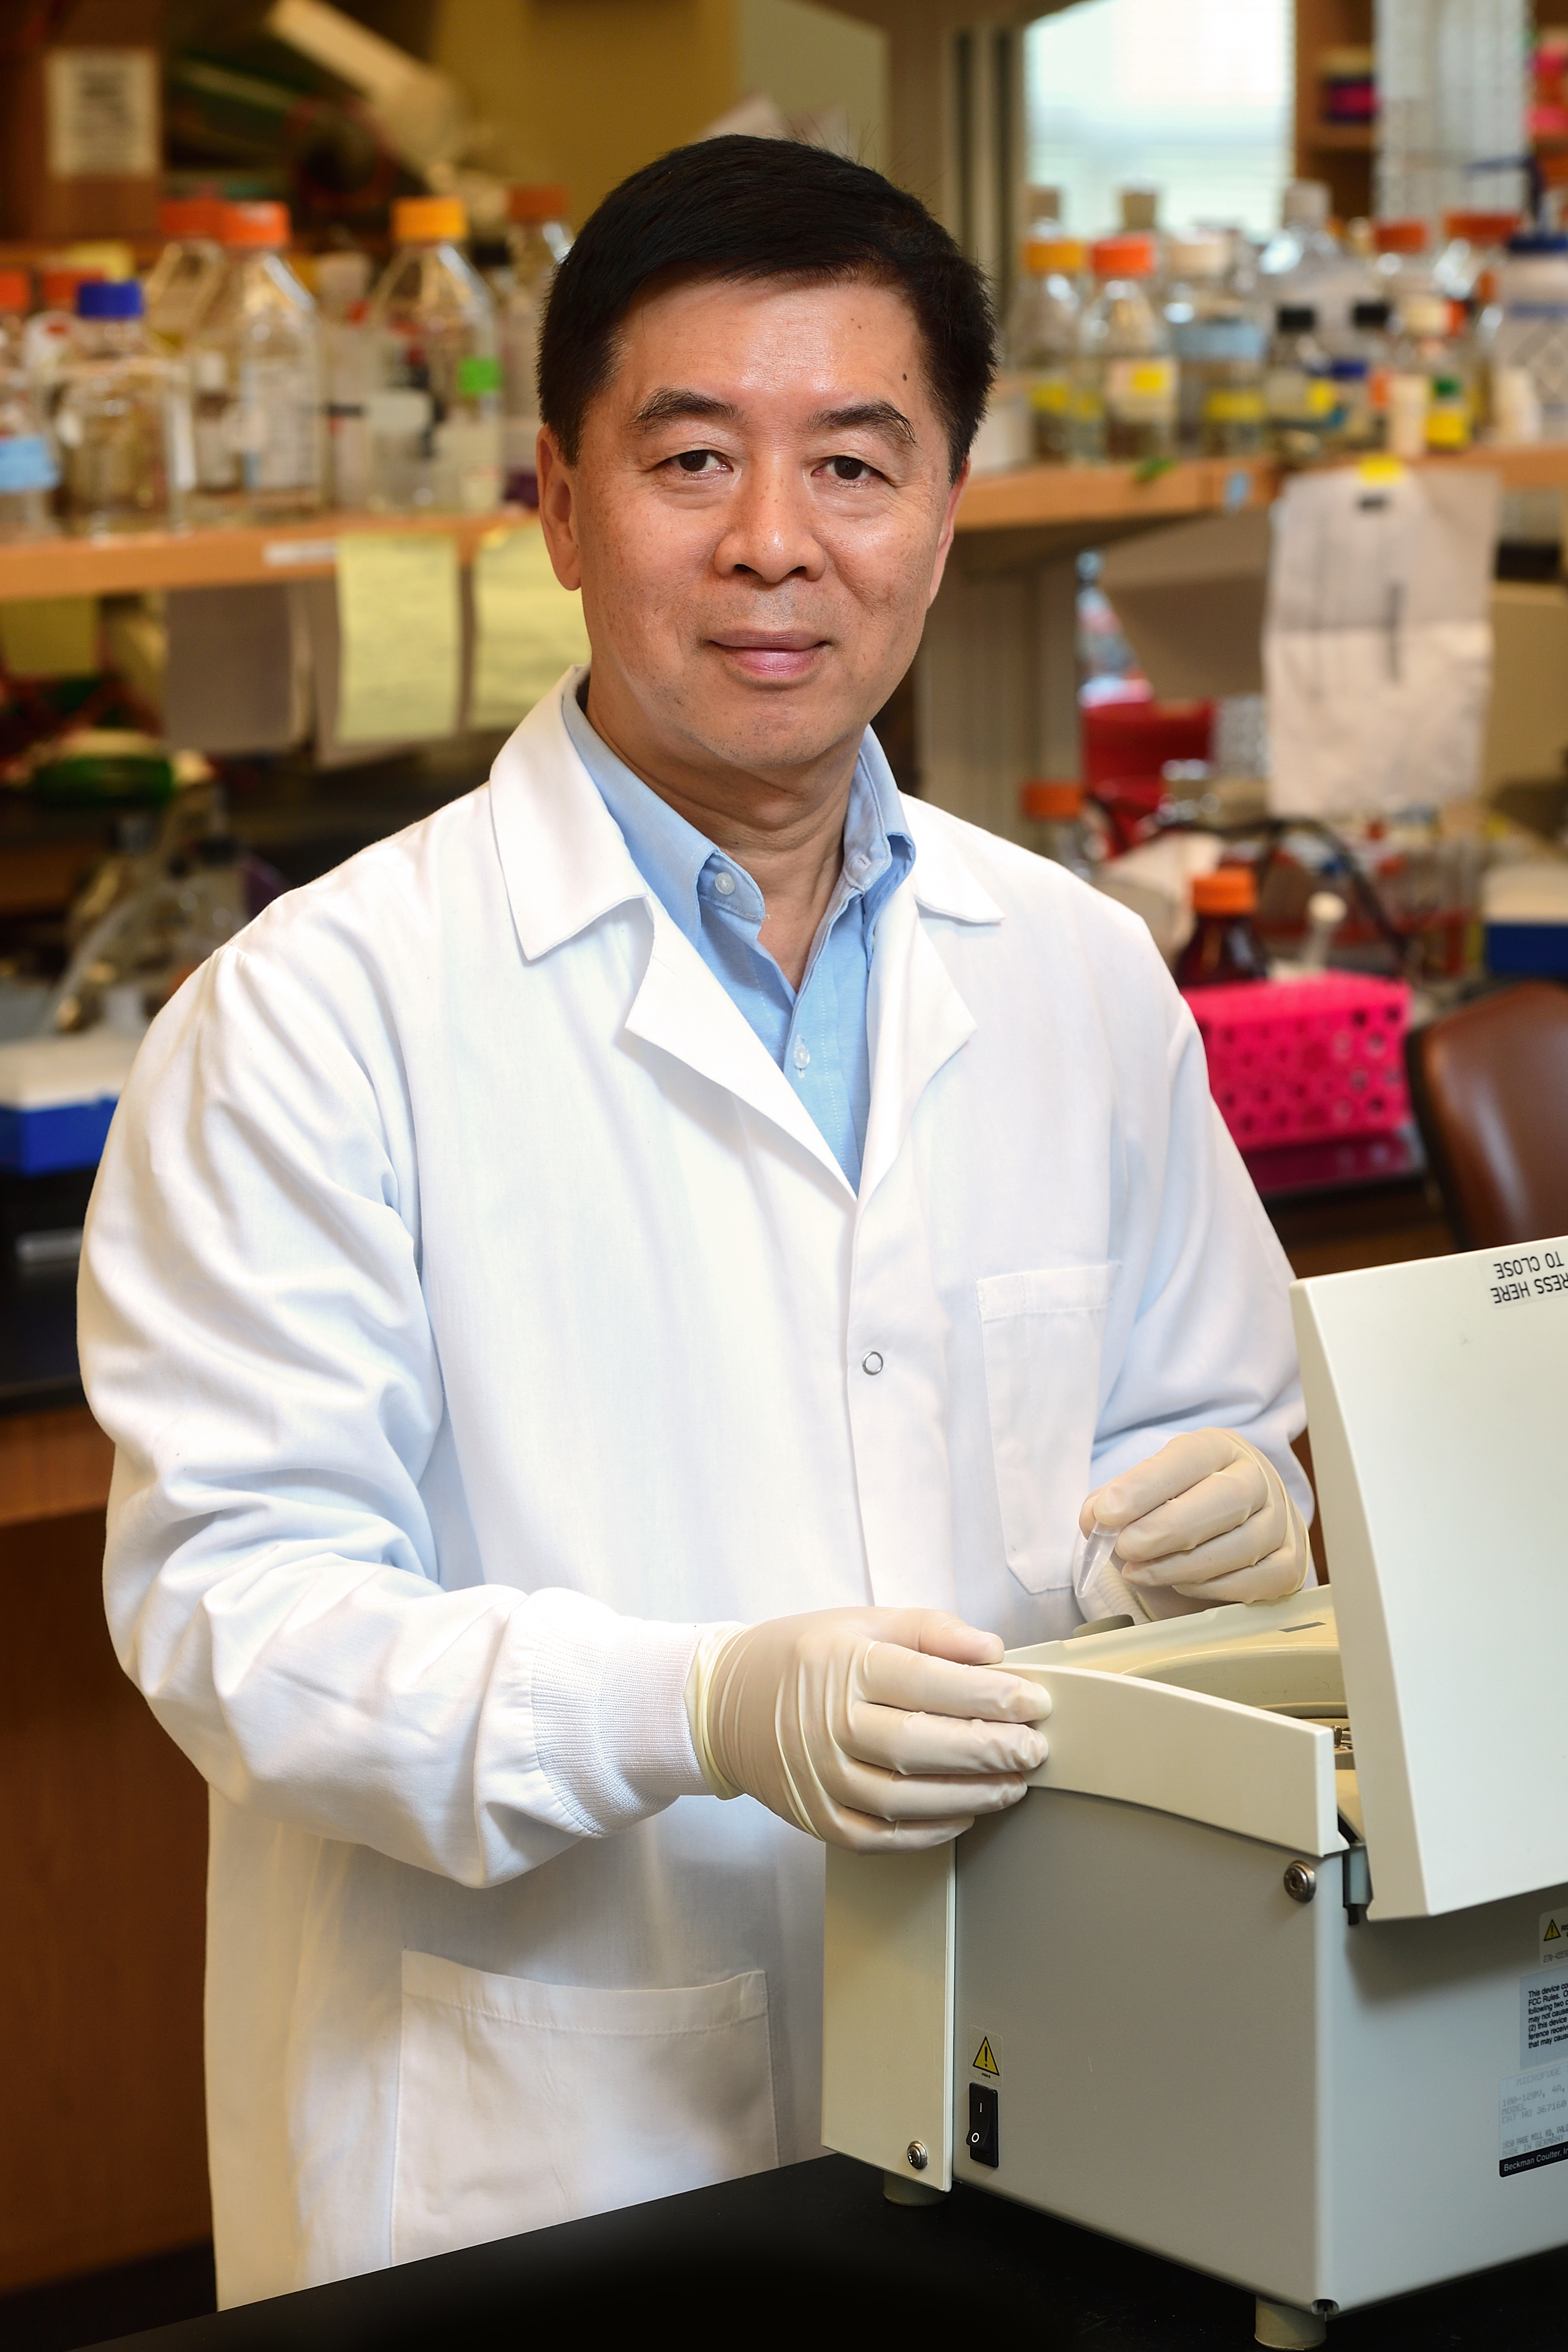 Zixu Mao, MD, PhD